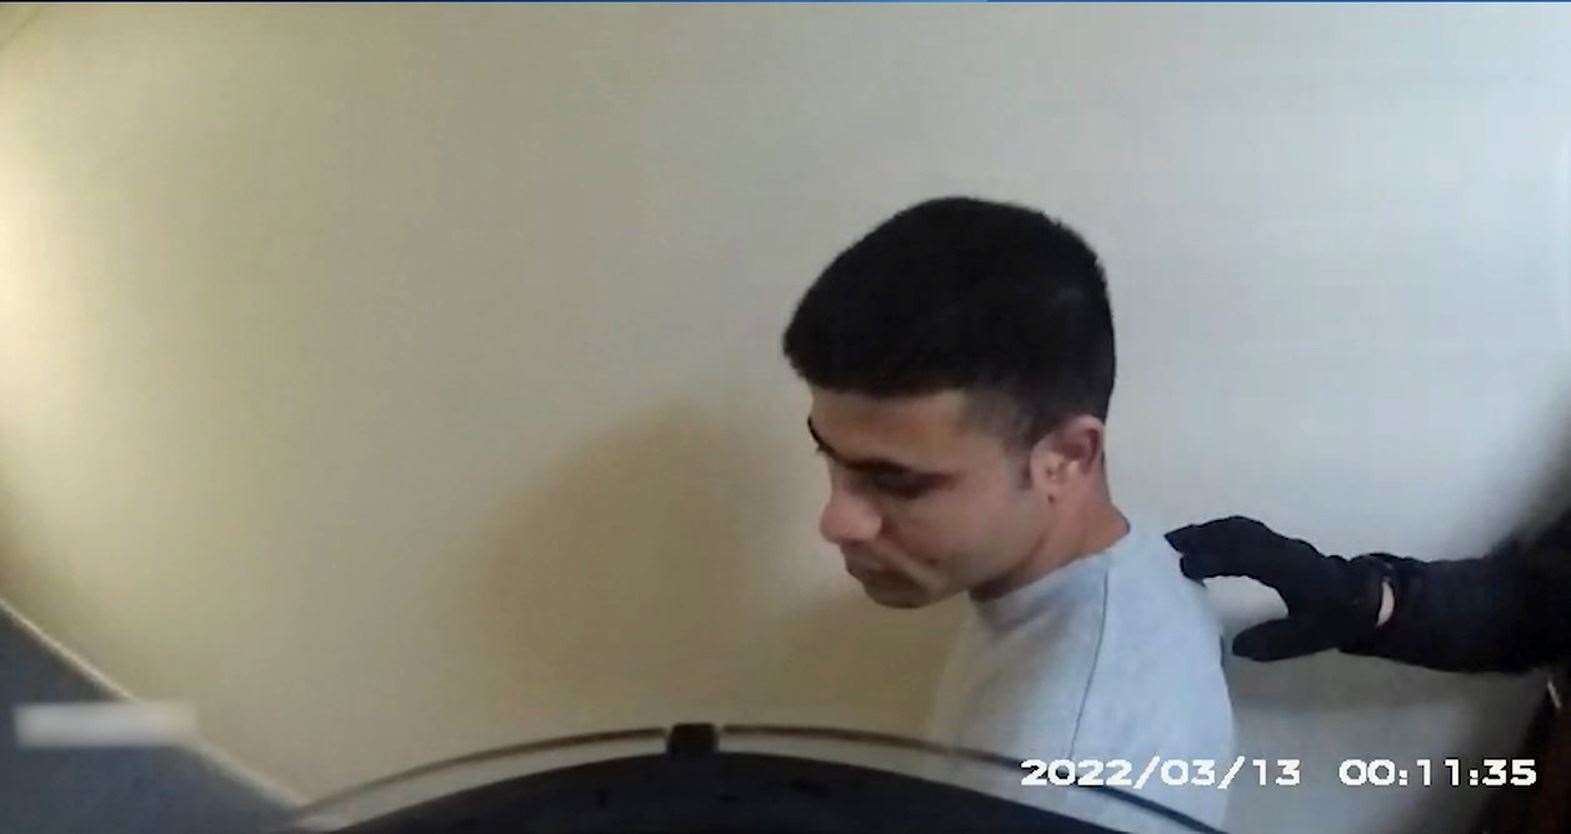 Screenshot of the arrest of Lawangeen Abdulrahimzai from body worn video footage (Dorset Police/PA)